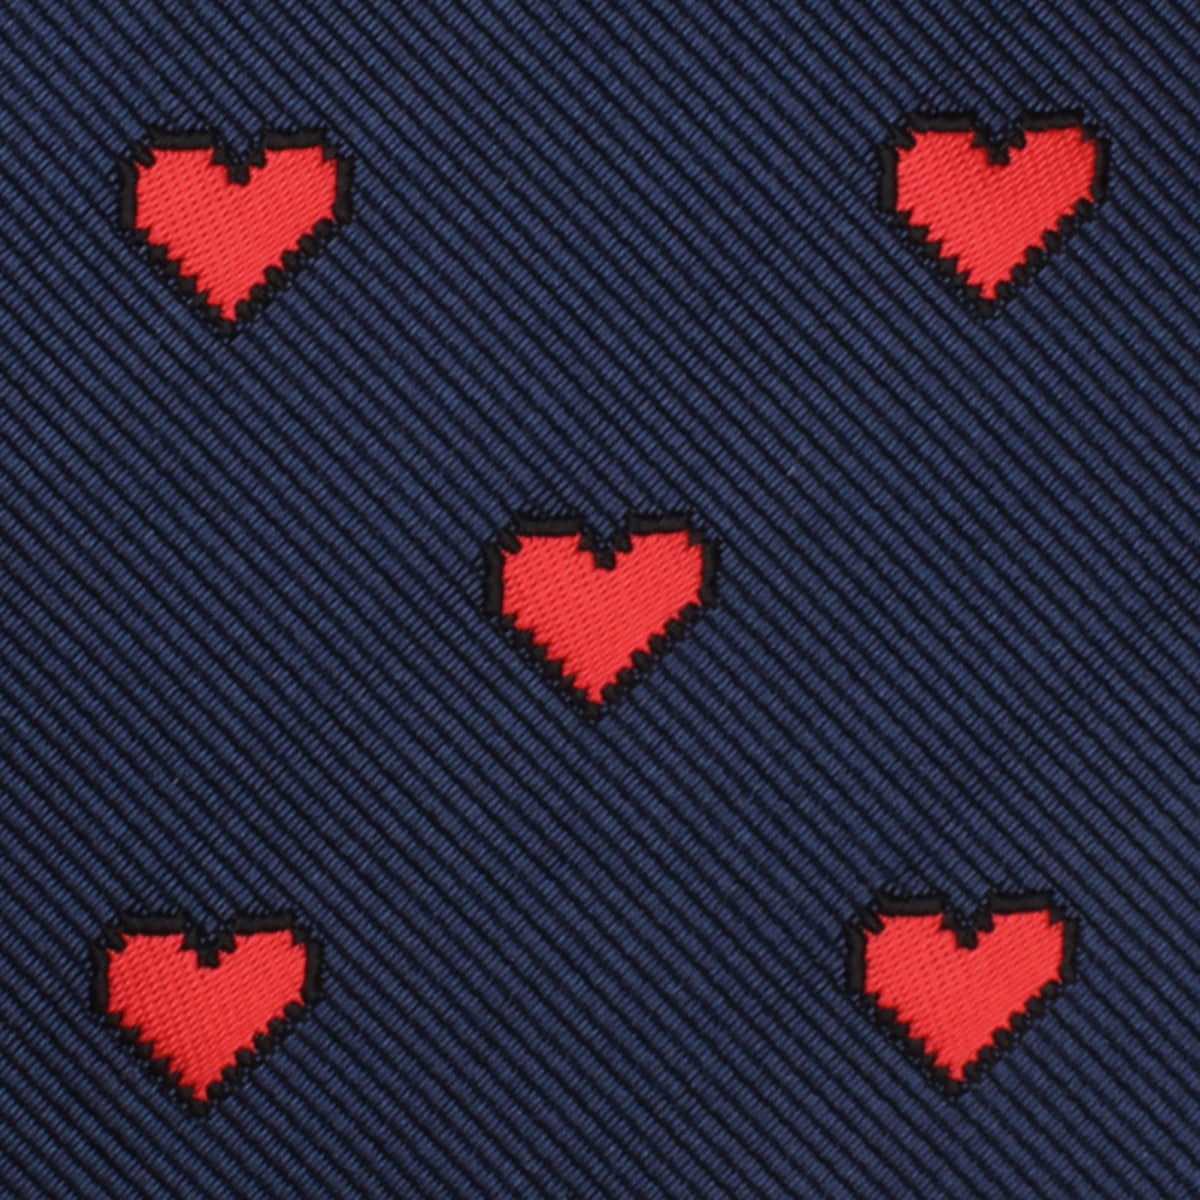 Pixel Love Heart Skinny Tie Fabric